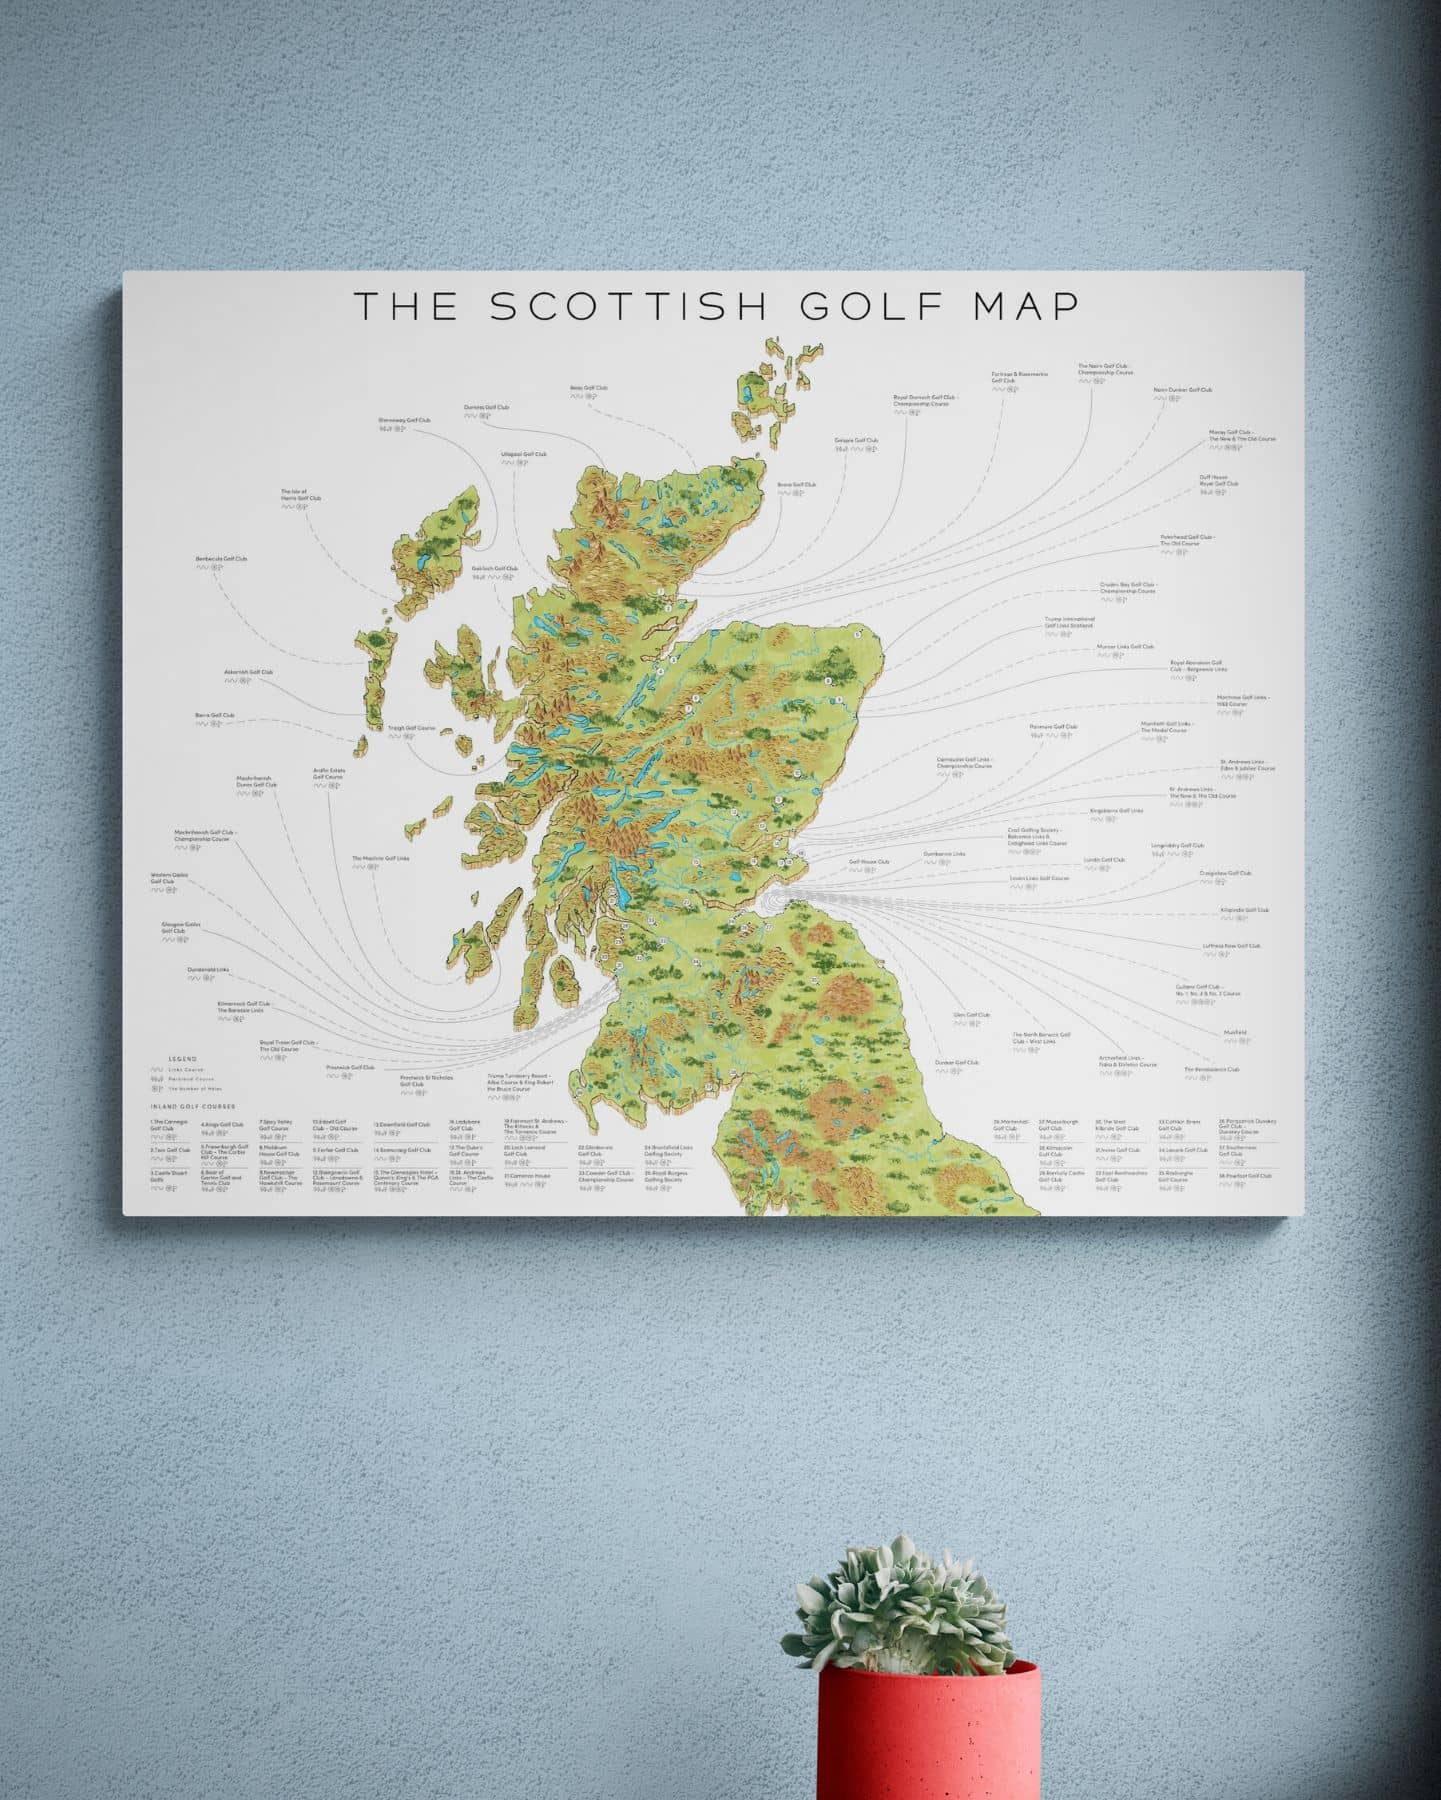 The Scottish Golf Map